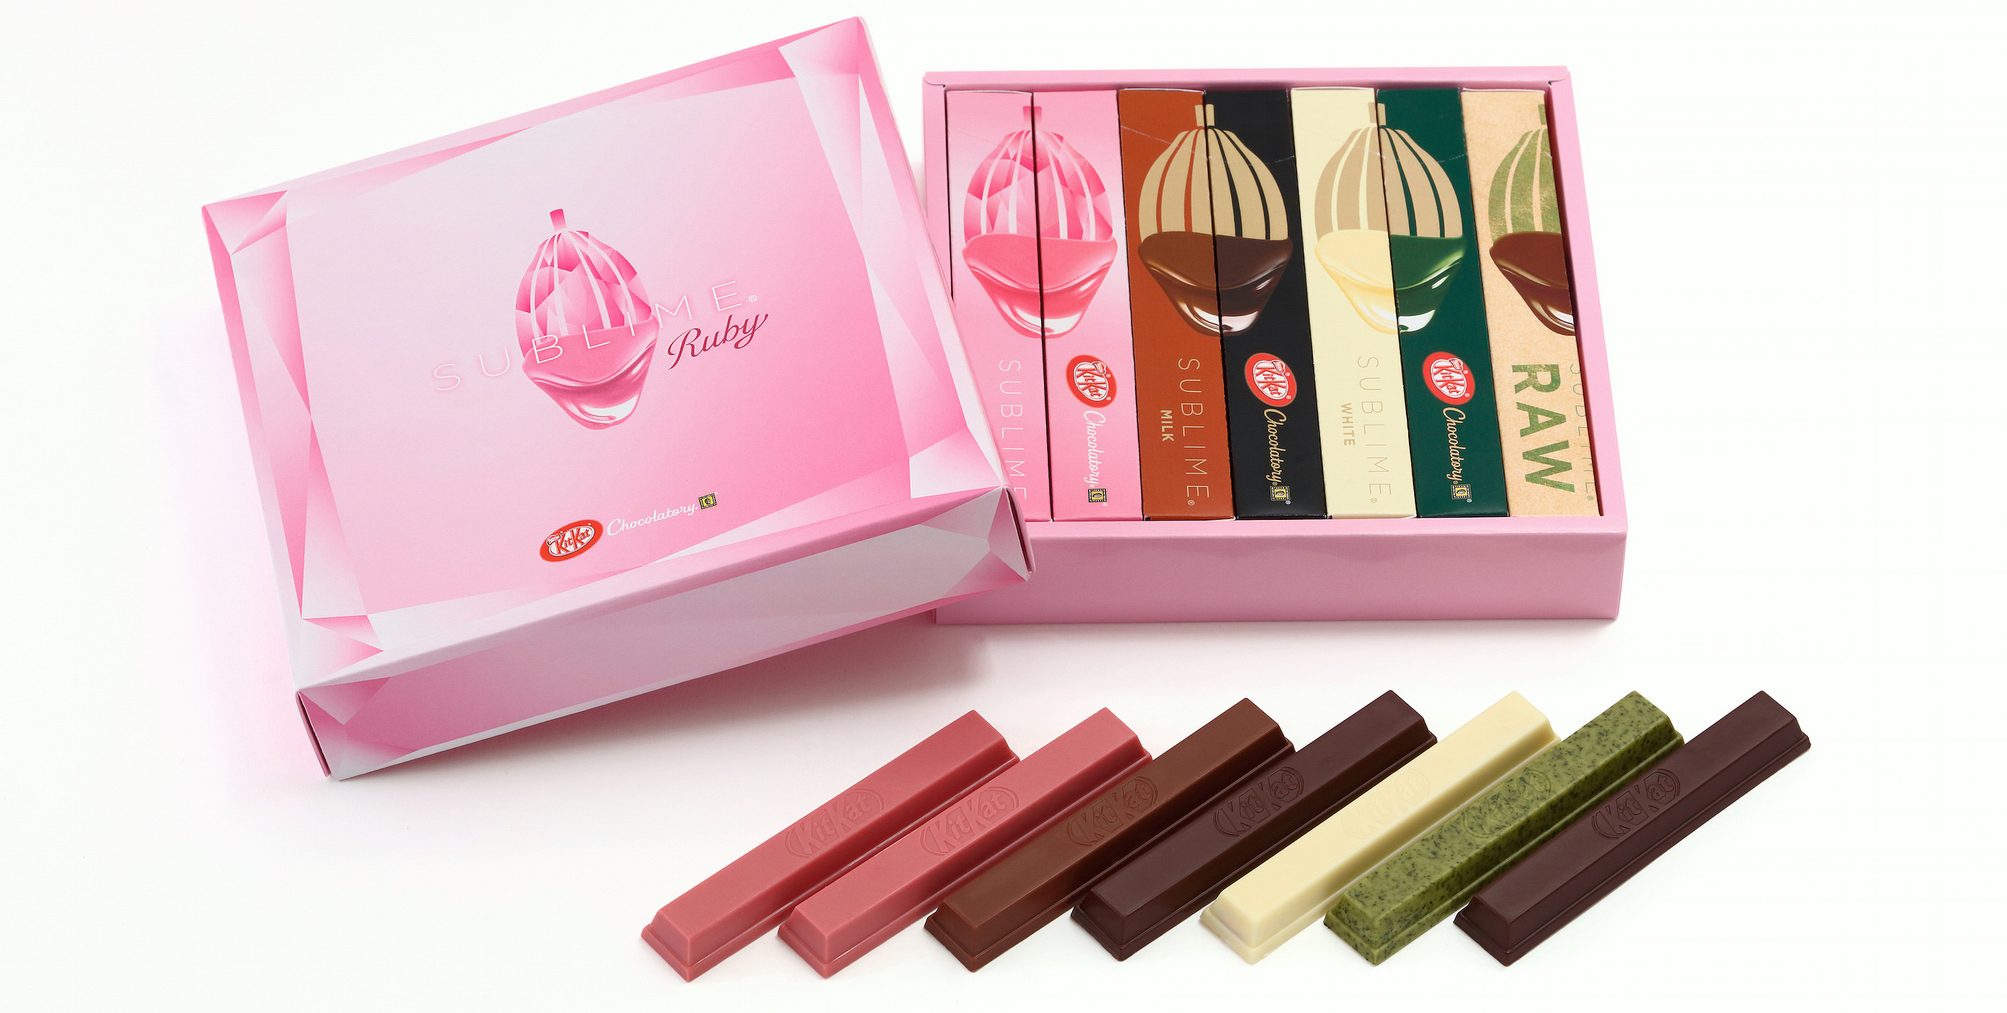 Sublime Ruby KitKat gift box - Flickr/ Nestlé Japan